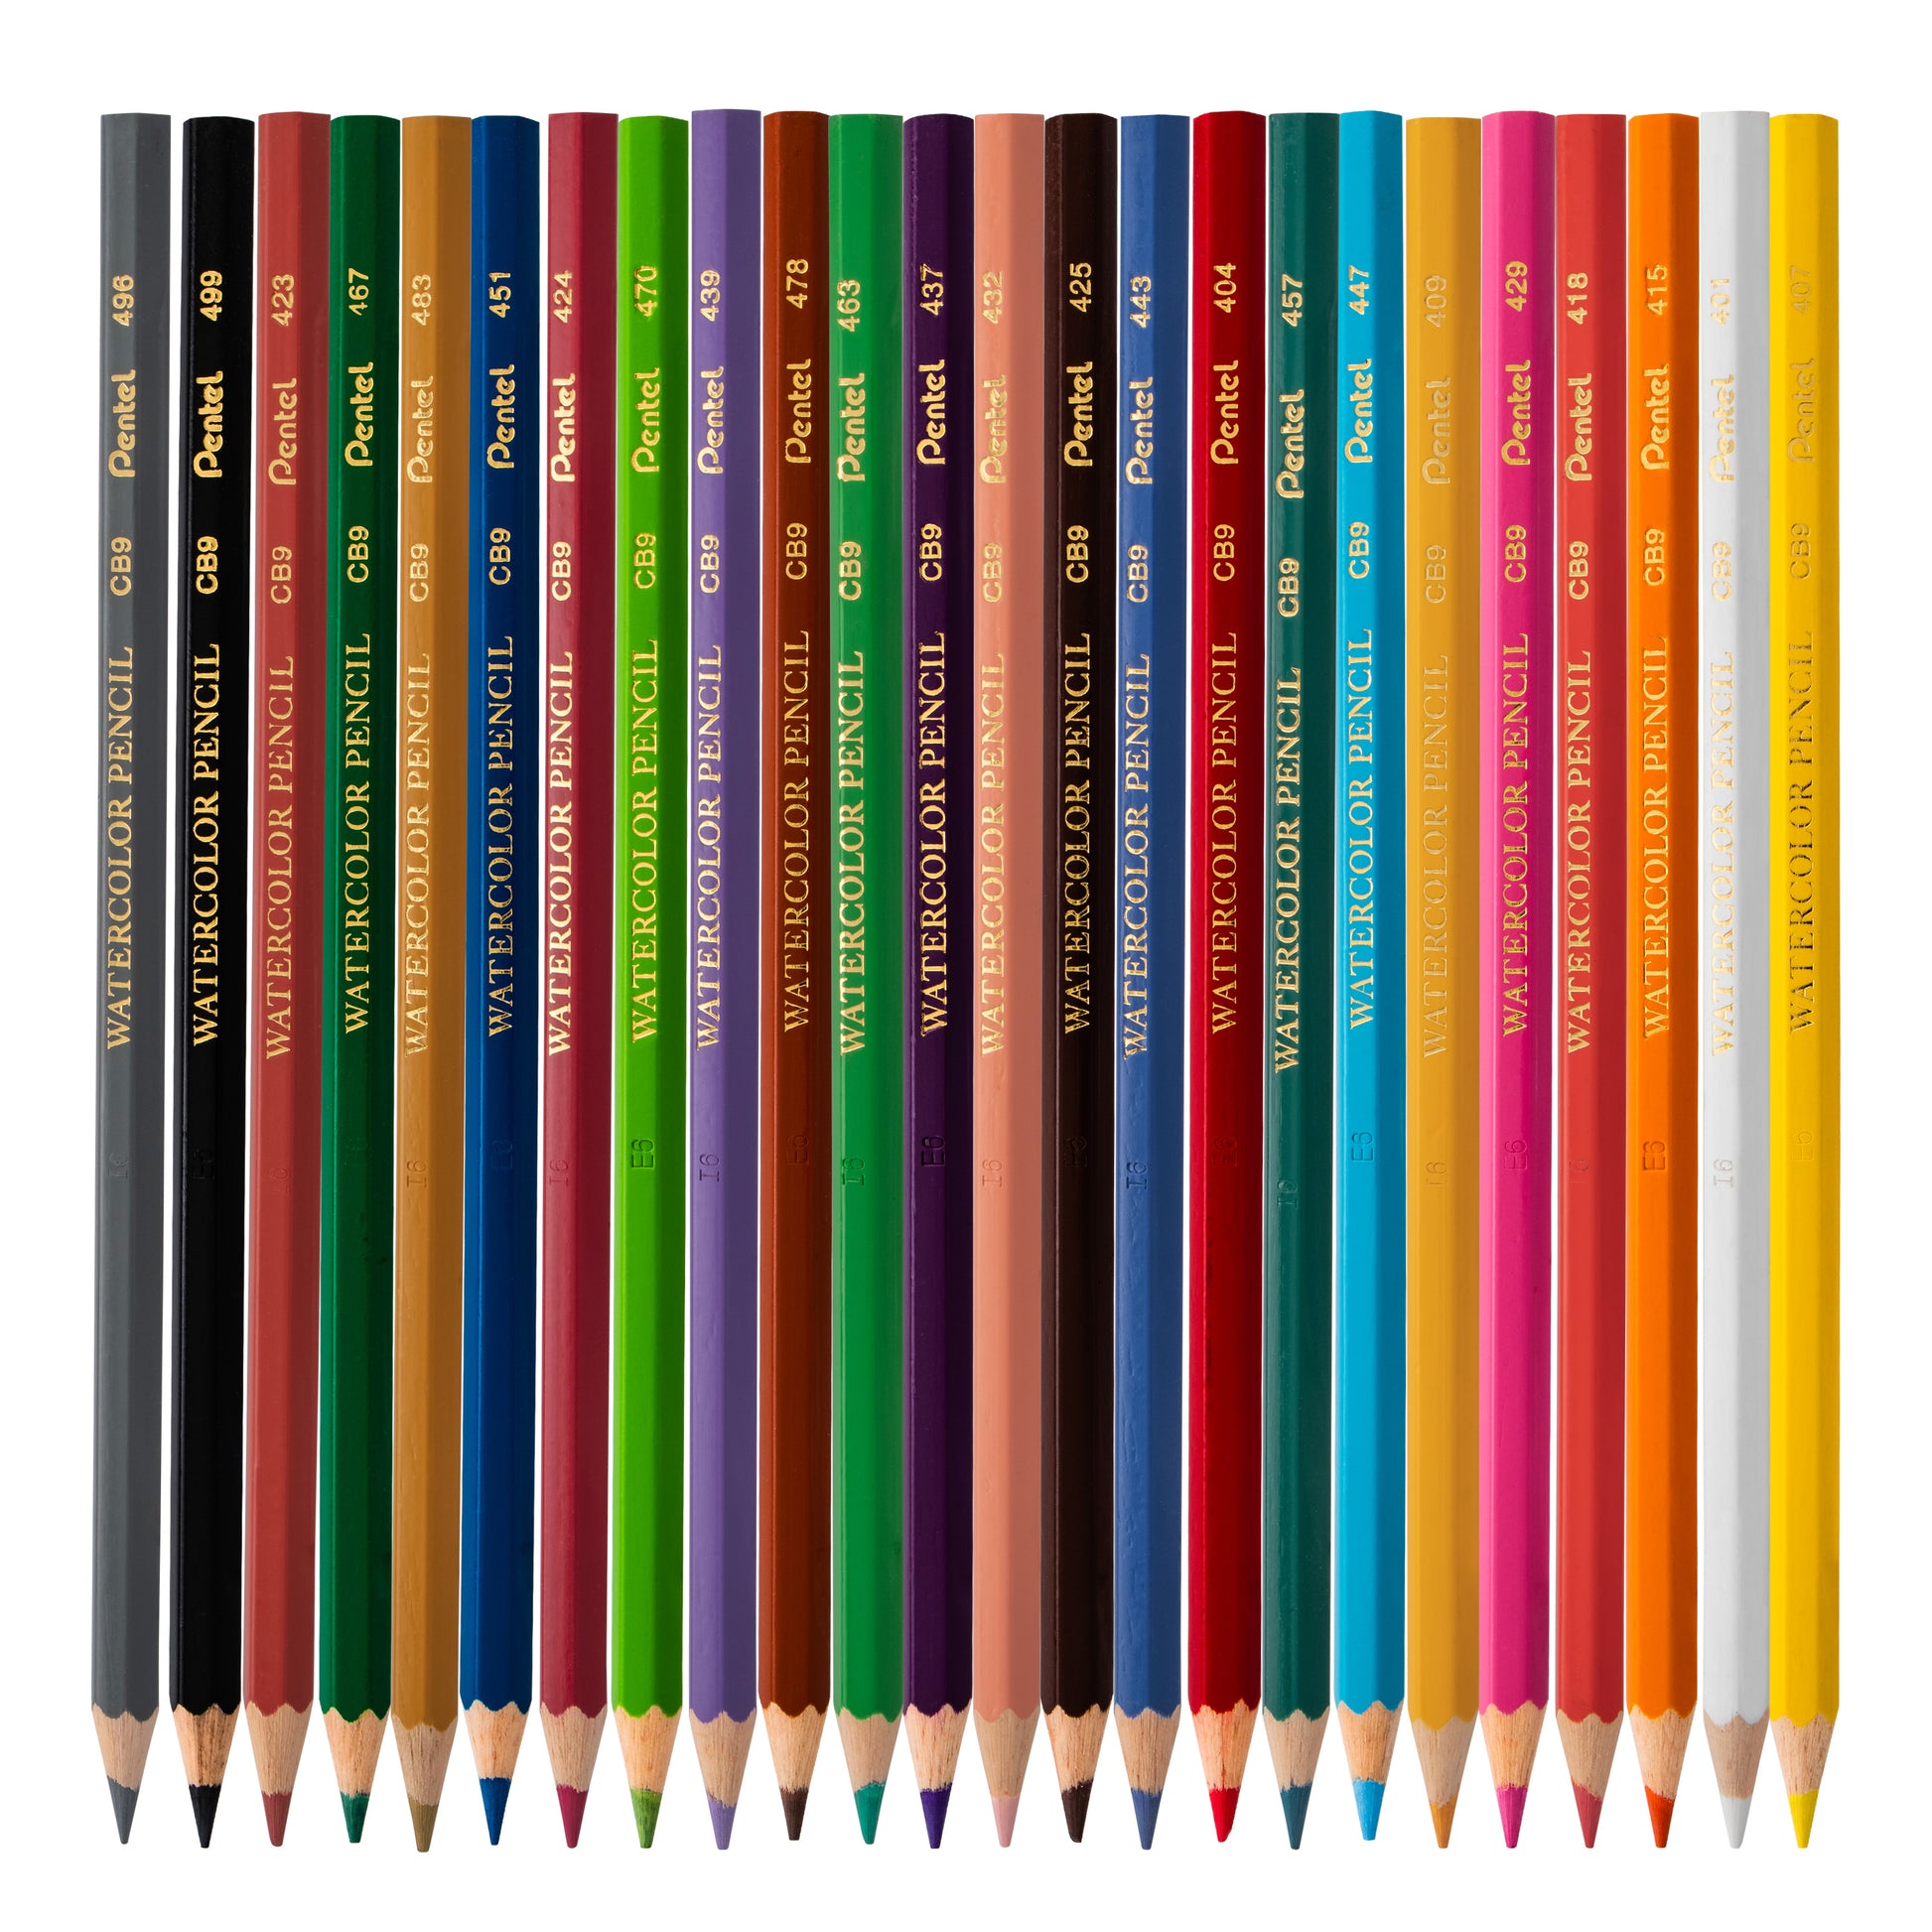 Pentel Color Pencils Set of 24